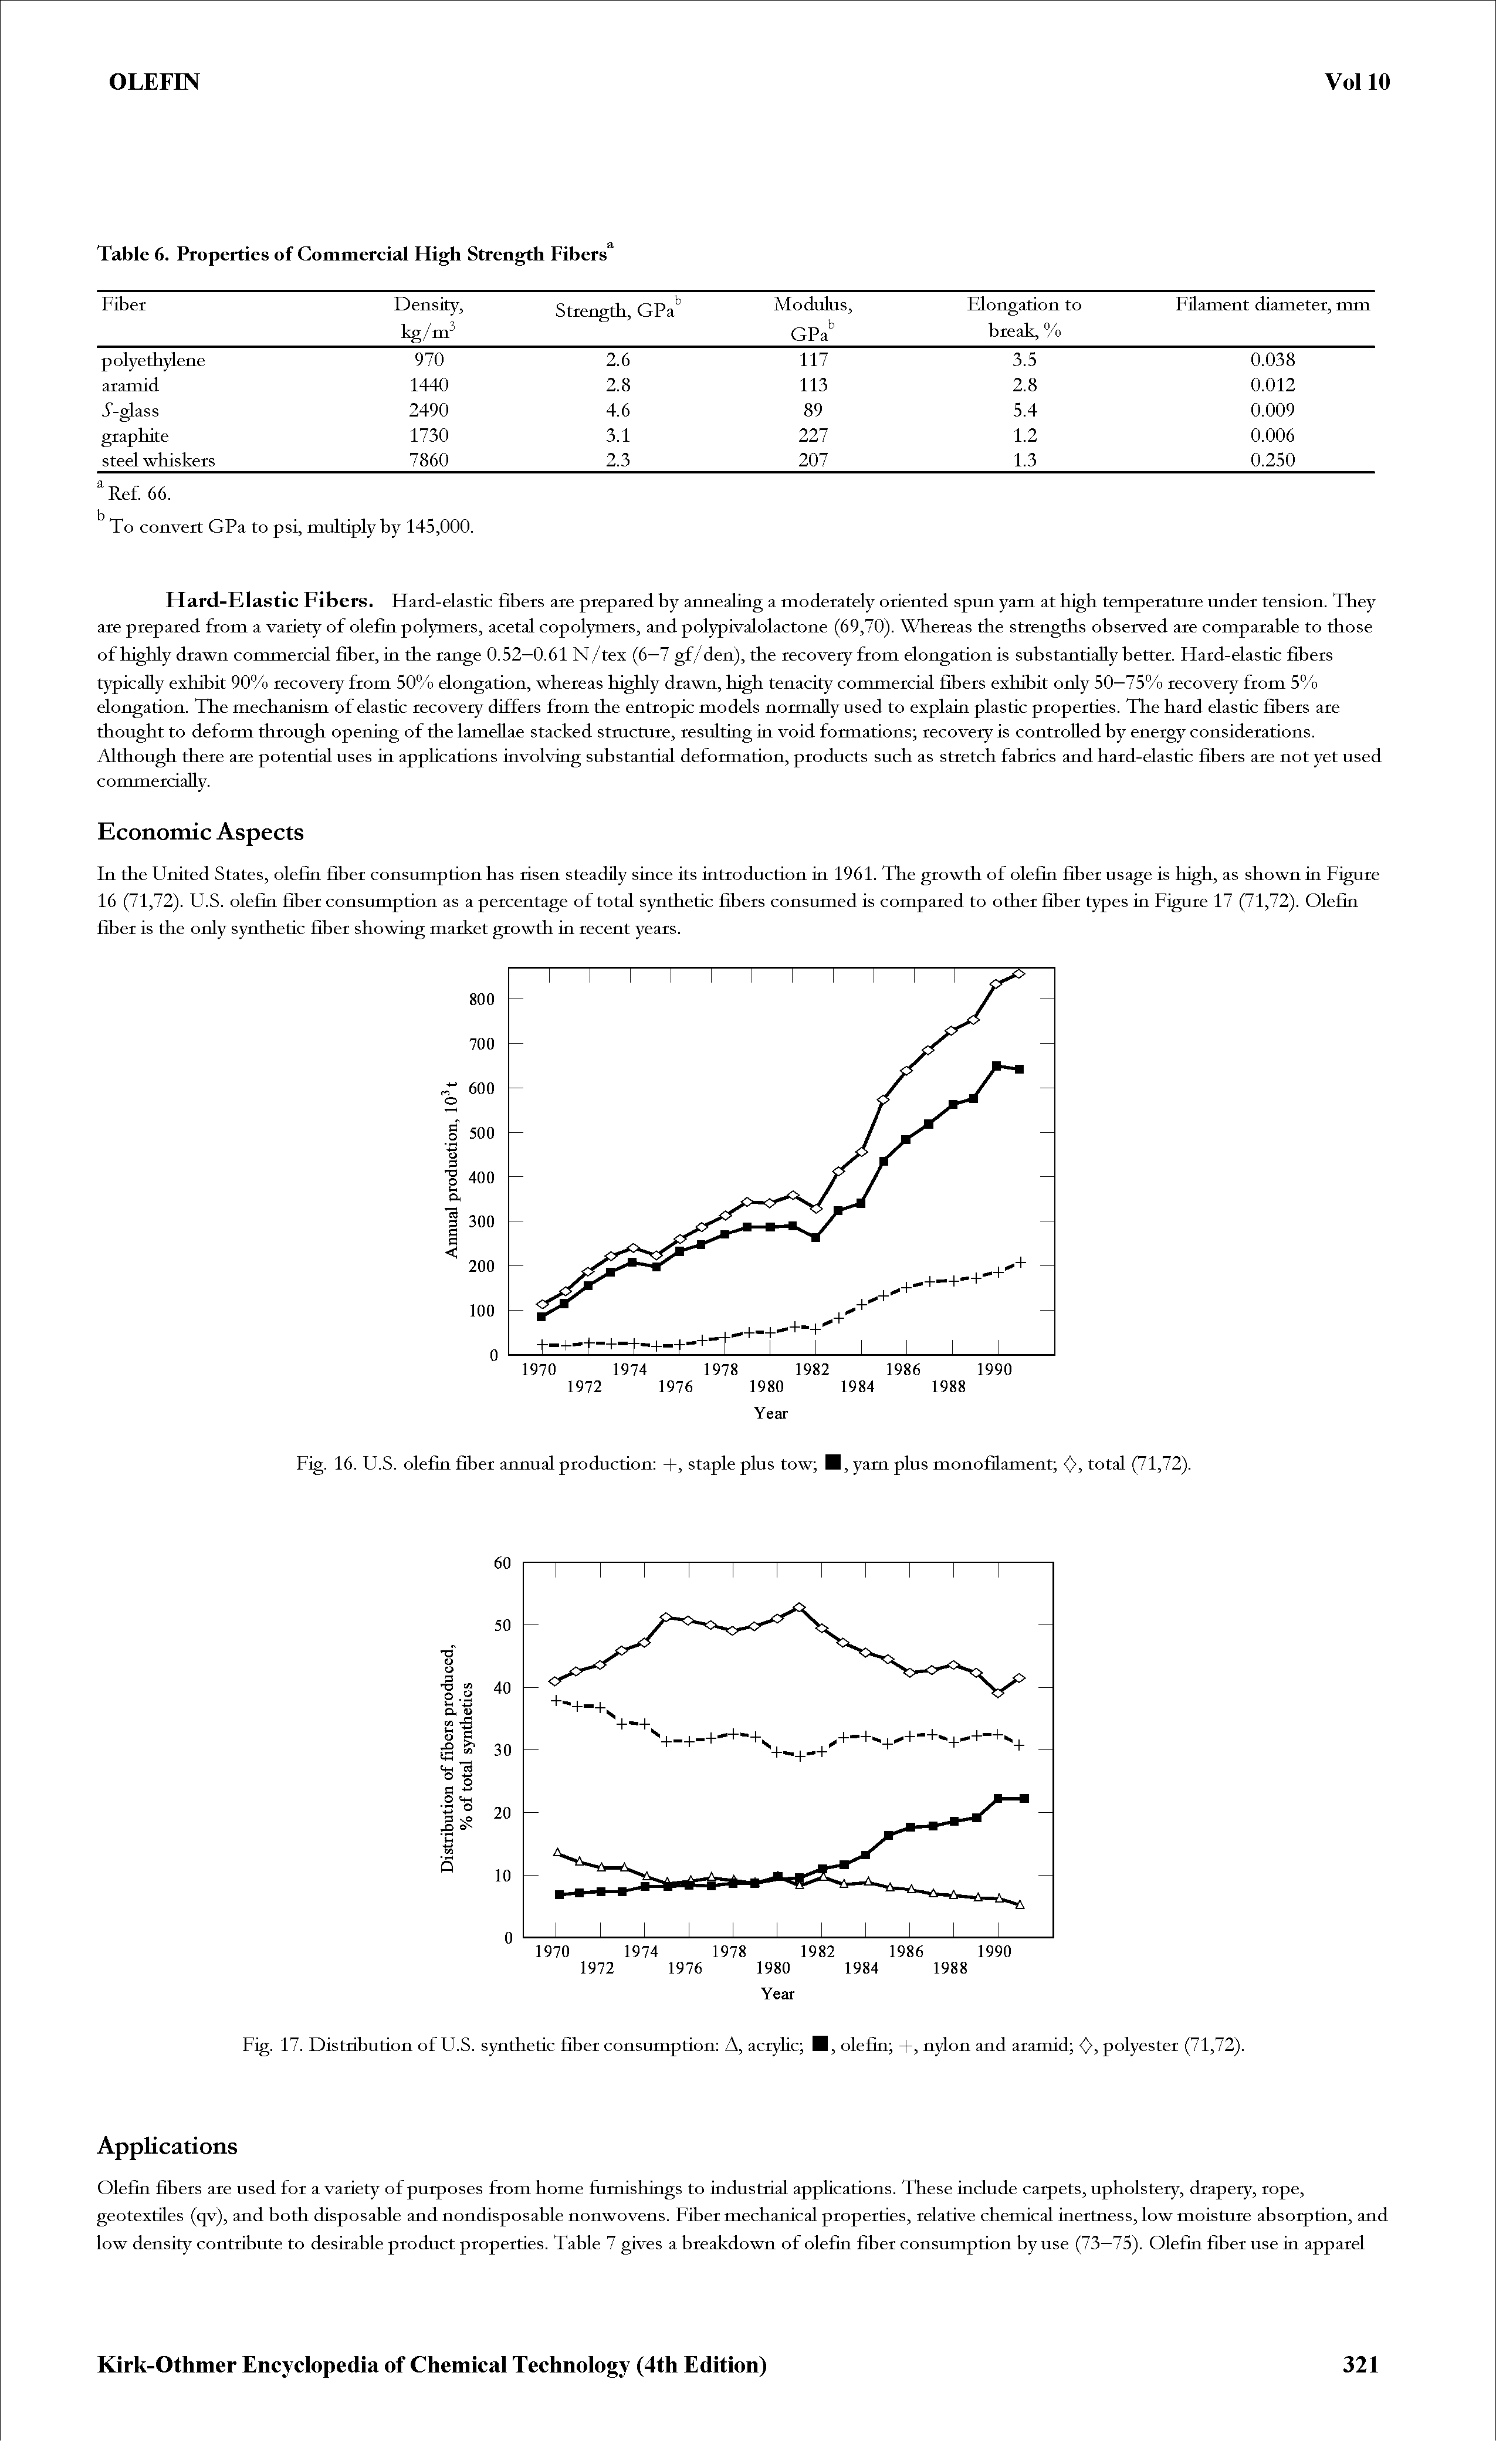 Fig. 17. Distribution of U.S. synthetic fiber consumption A, acryUc I, olefin +, nylon and aramid A, polyester (71,72).